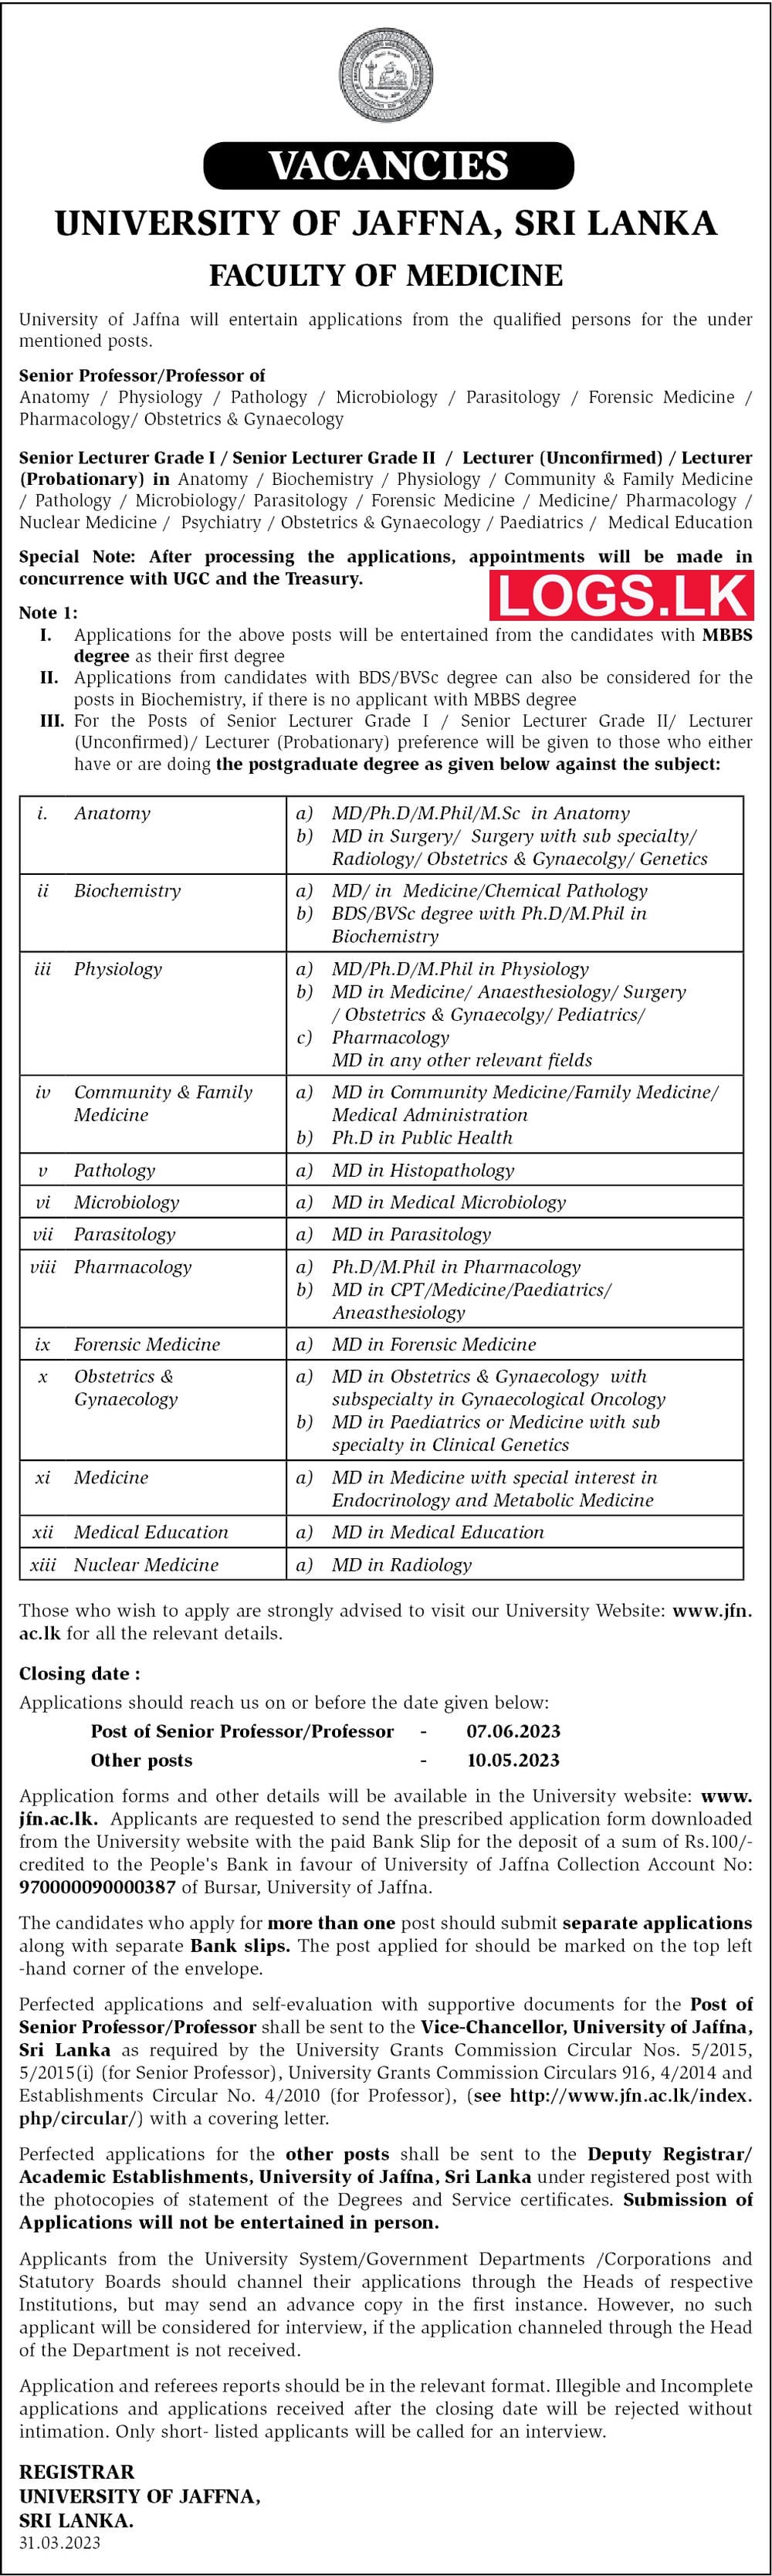 University of Jaffna Faculty of Medicine Job Vacancies 2023 Application, Details Download